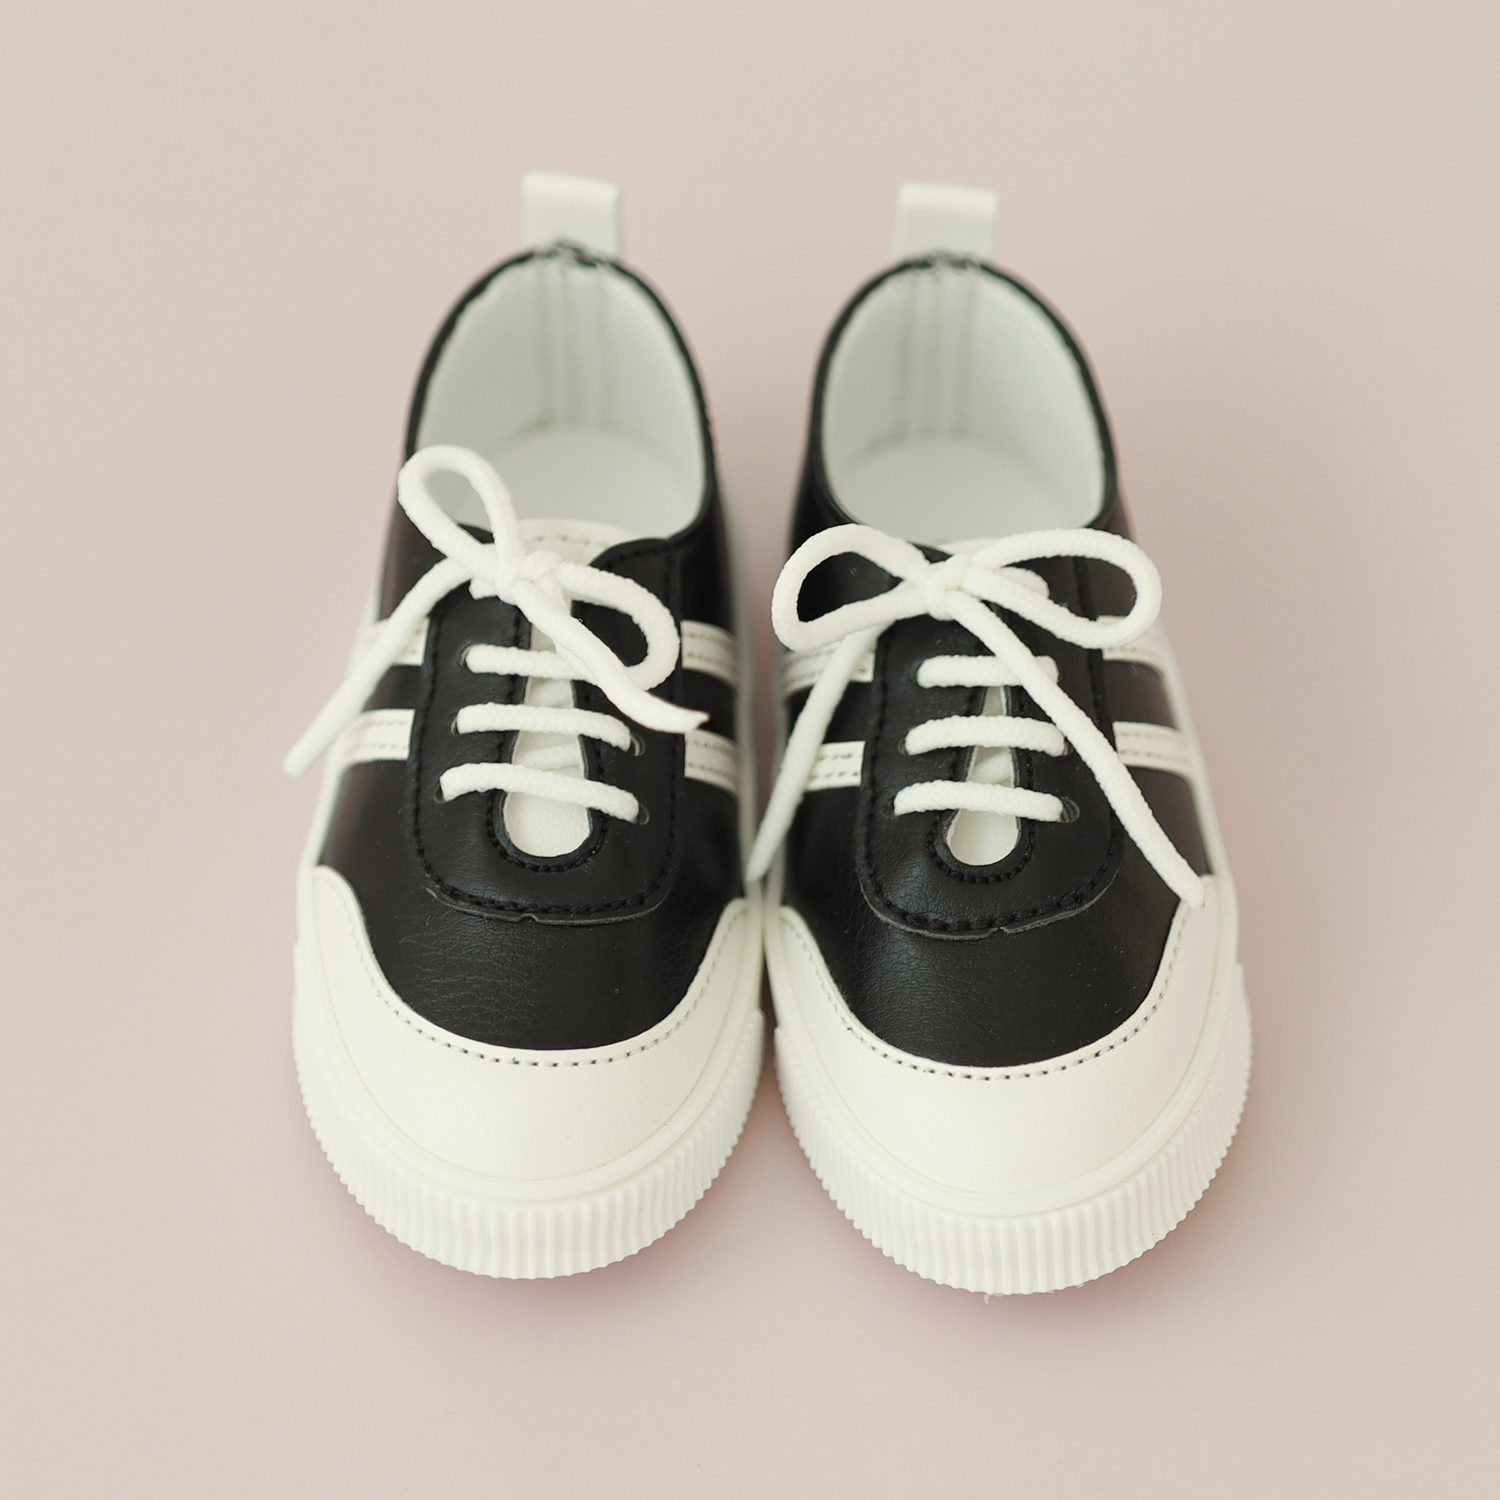 [SD9-16 Girl] Line sneakers. Black